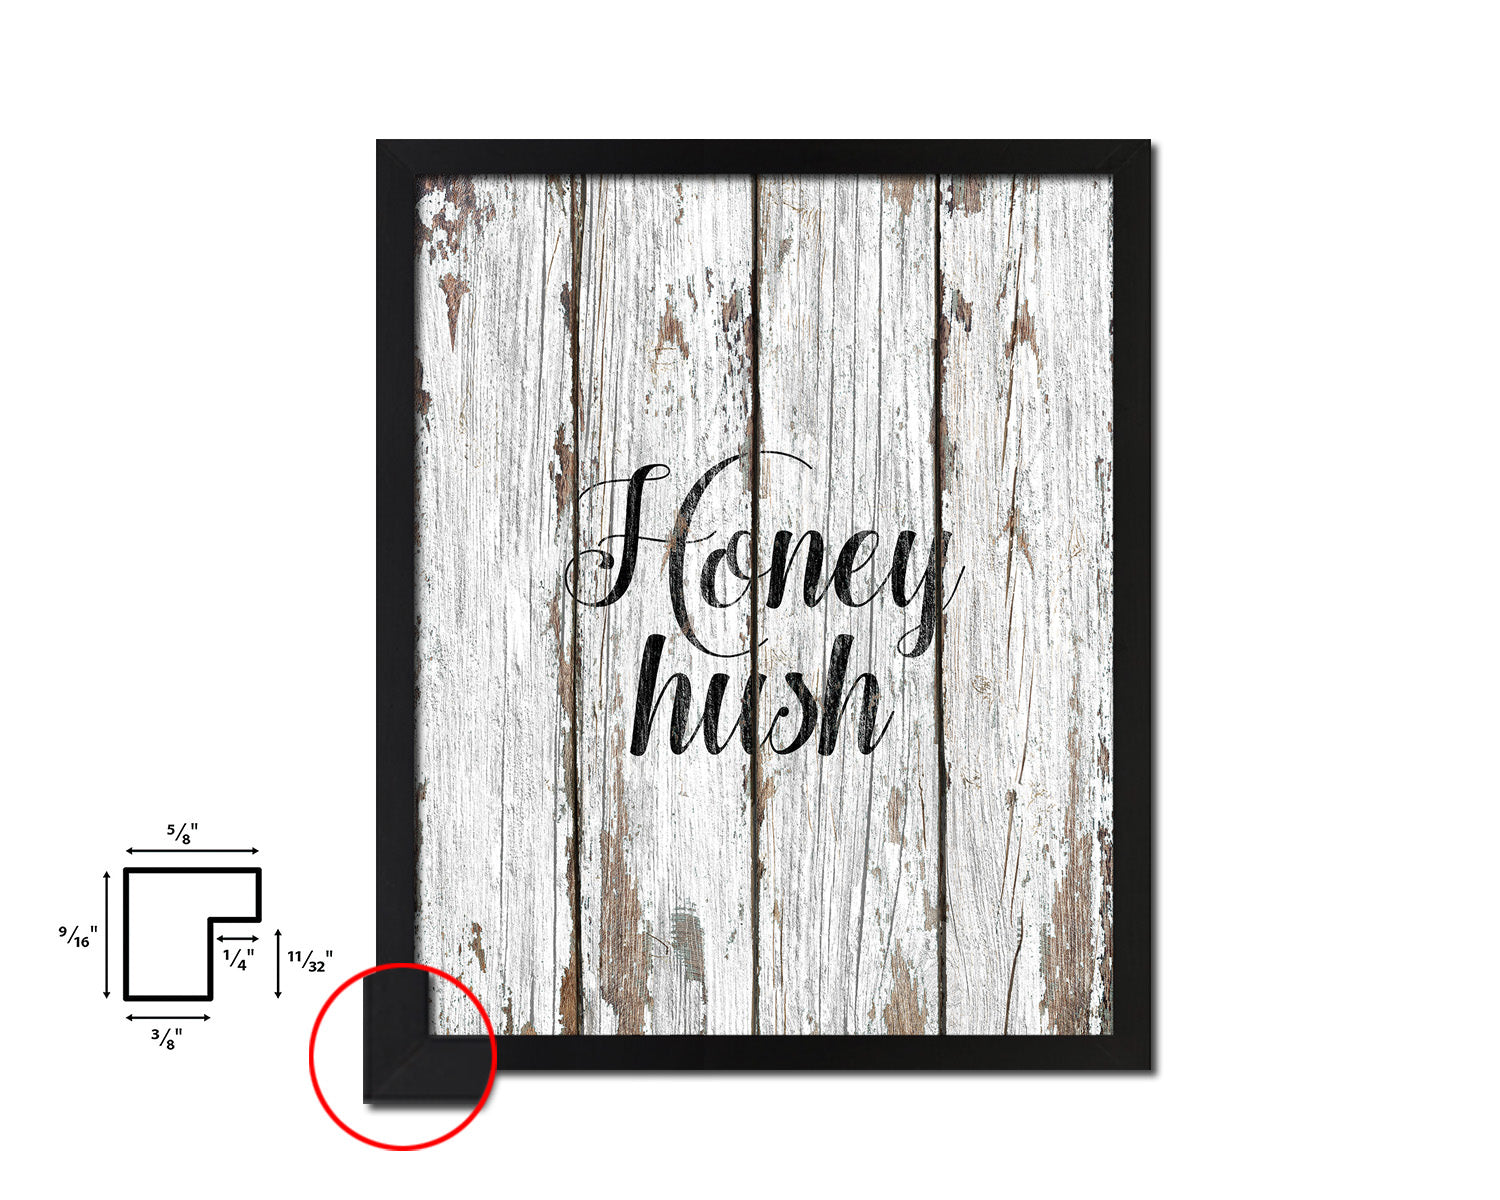 Honey hush Quote Framed Artwork Print Home Decor Wall Art Gifts